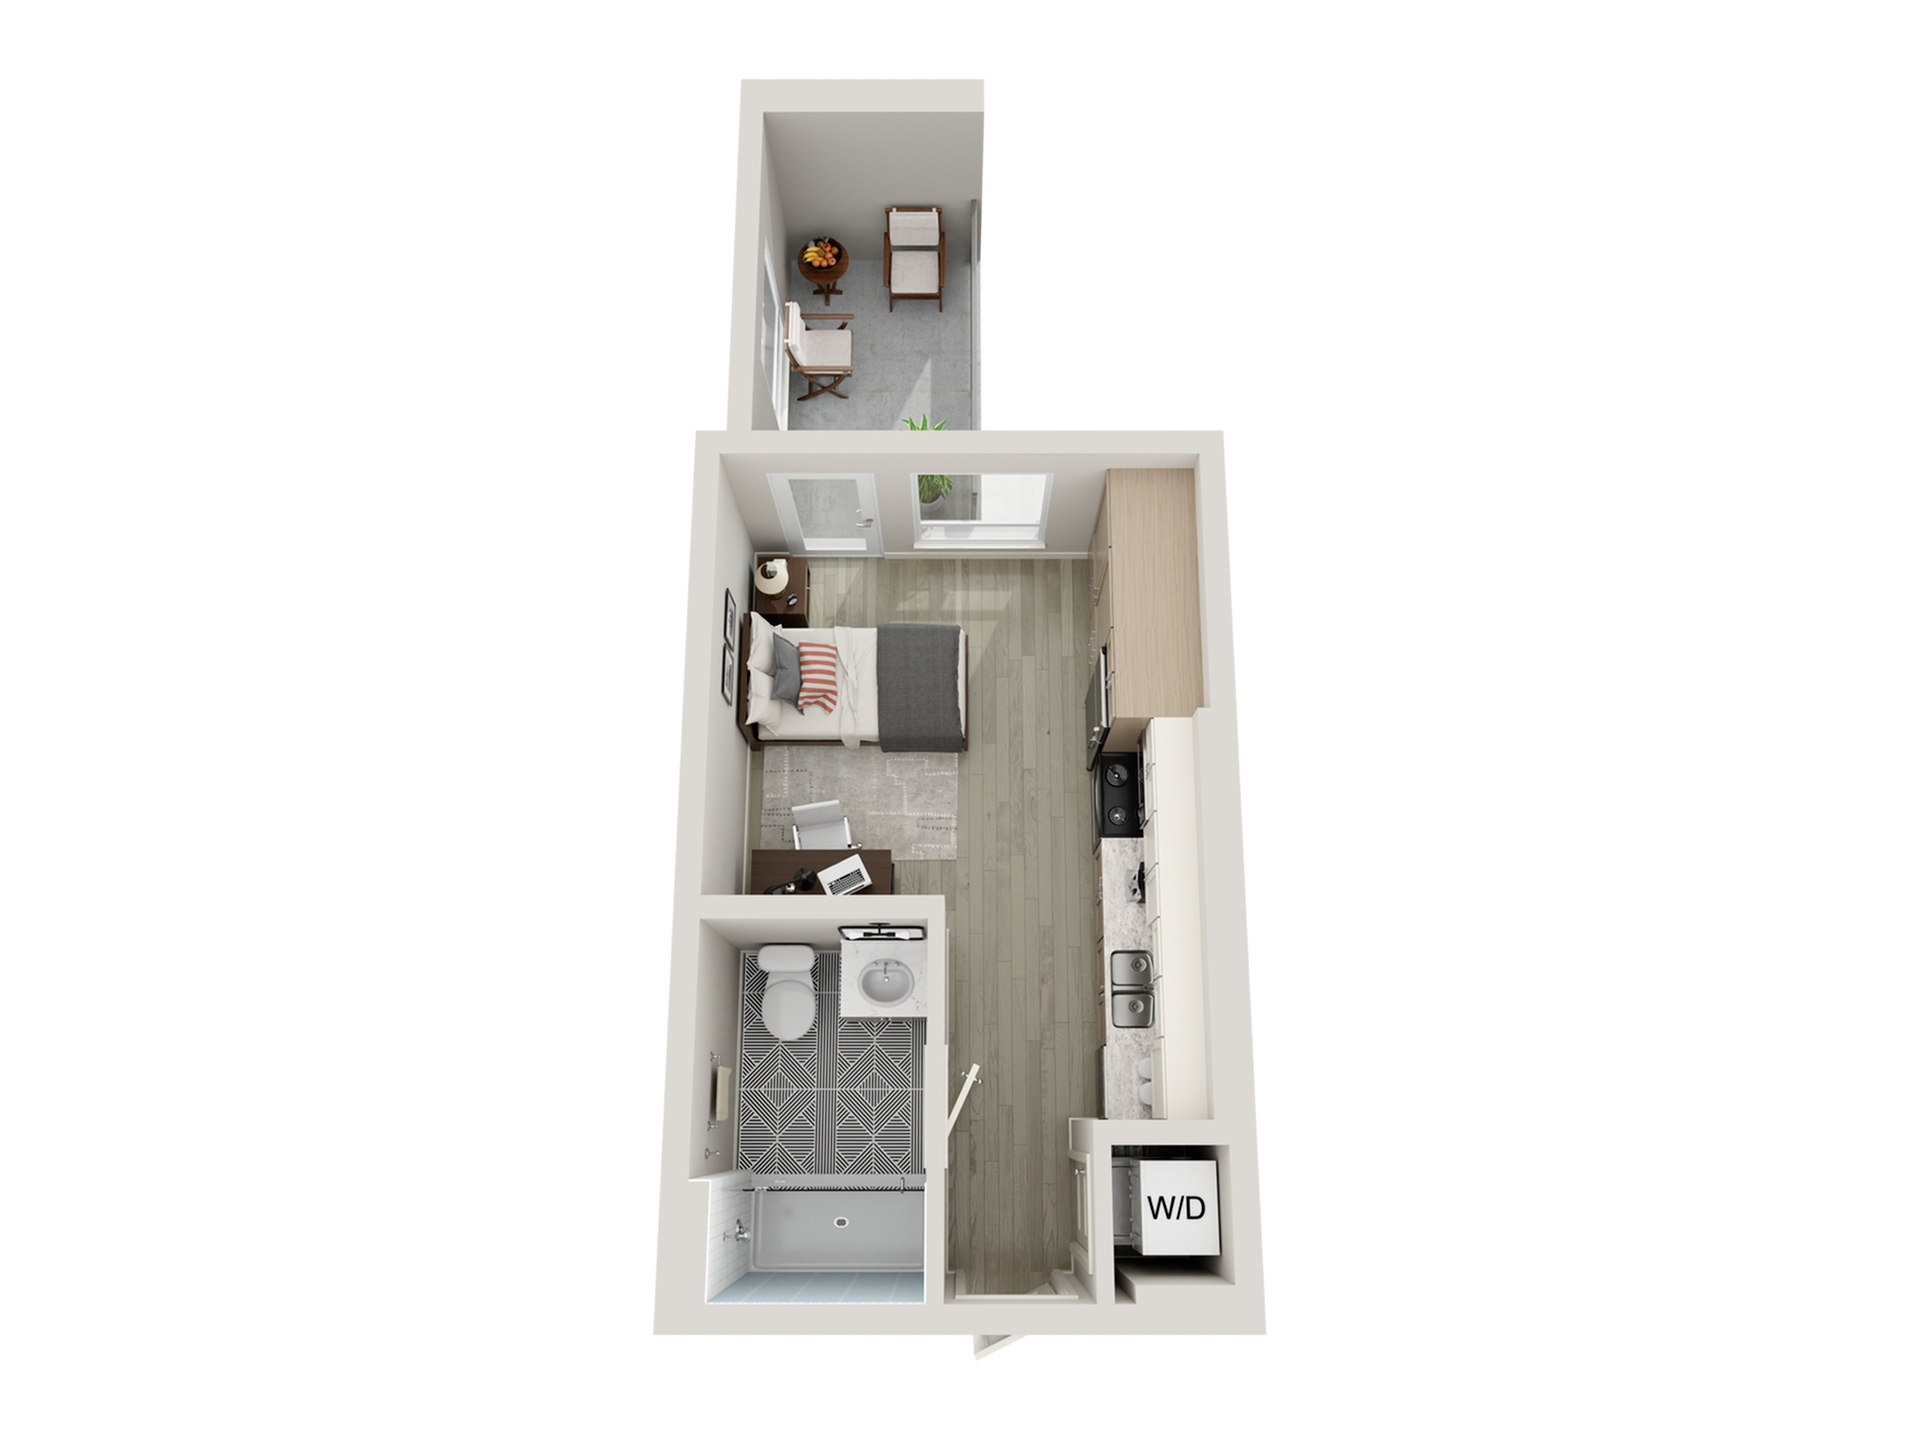 Studio floorplan with a bed, desk, kitchen, bathroom, outdoor patio, closet, and washer dryer.